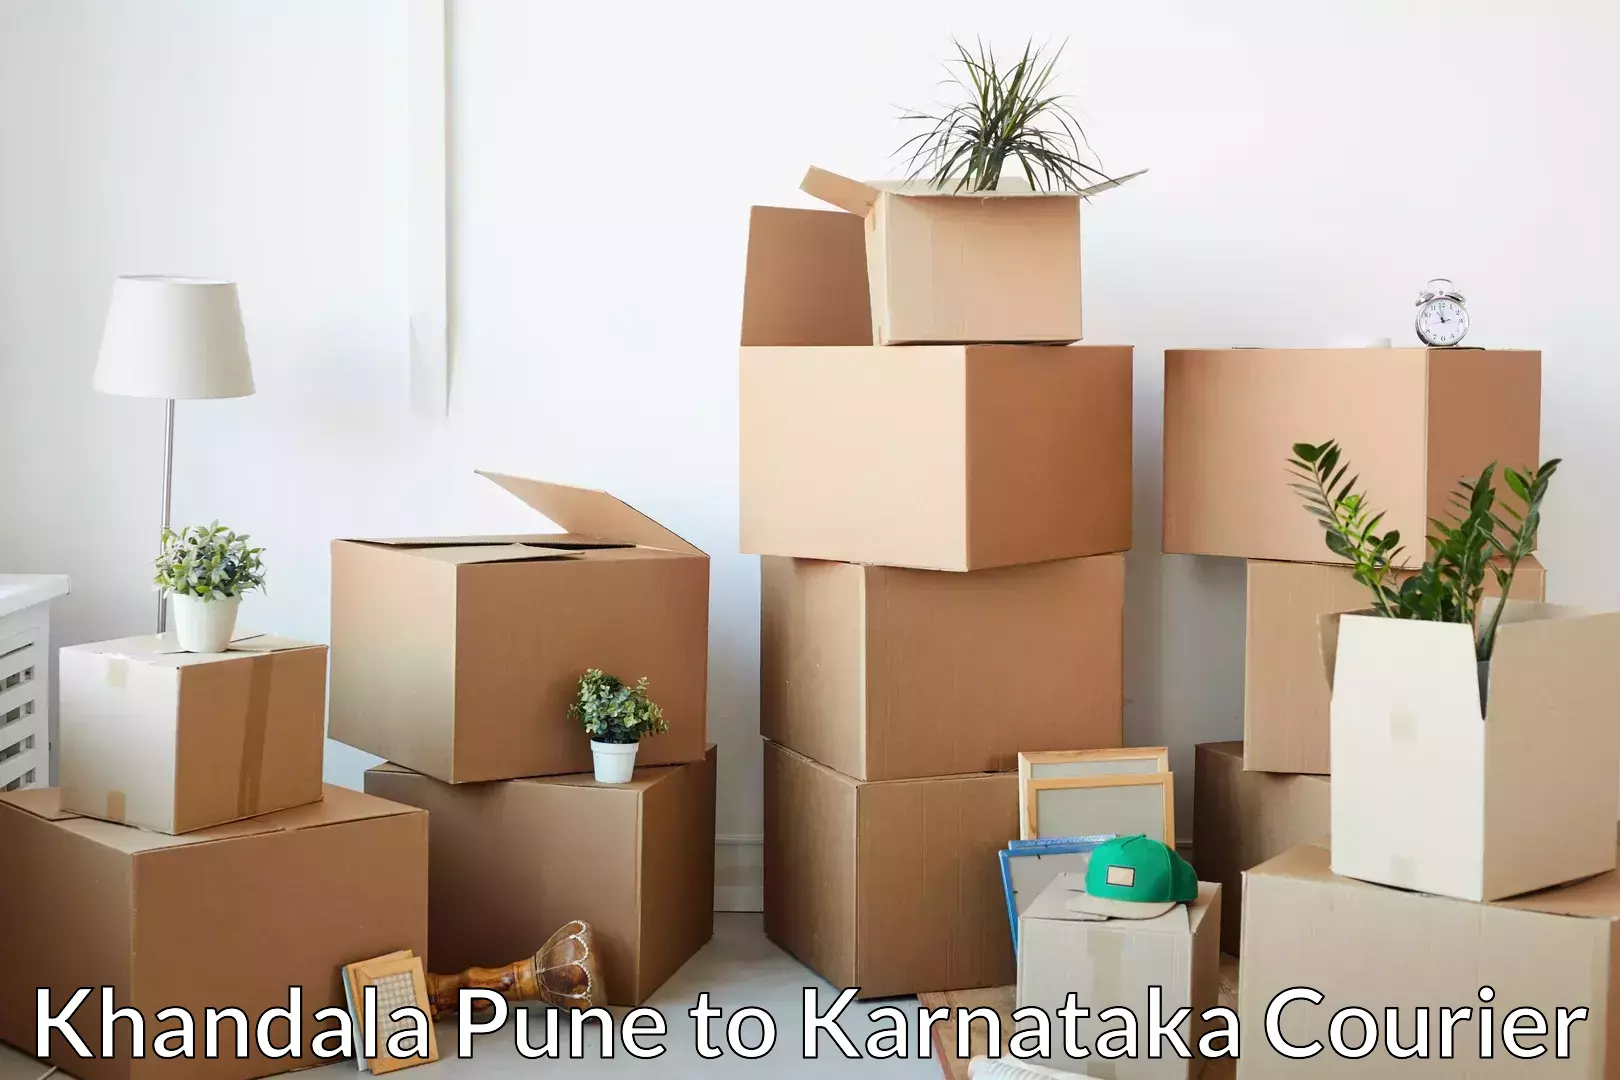 Professional furniture movers Khandala Pune to Karnataka